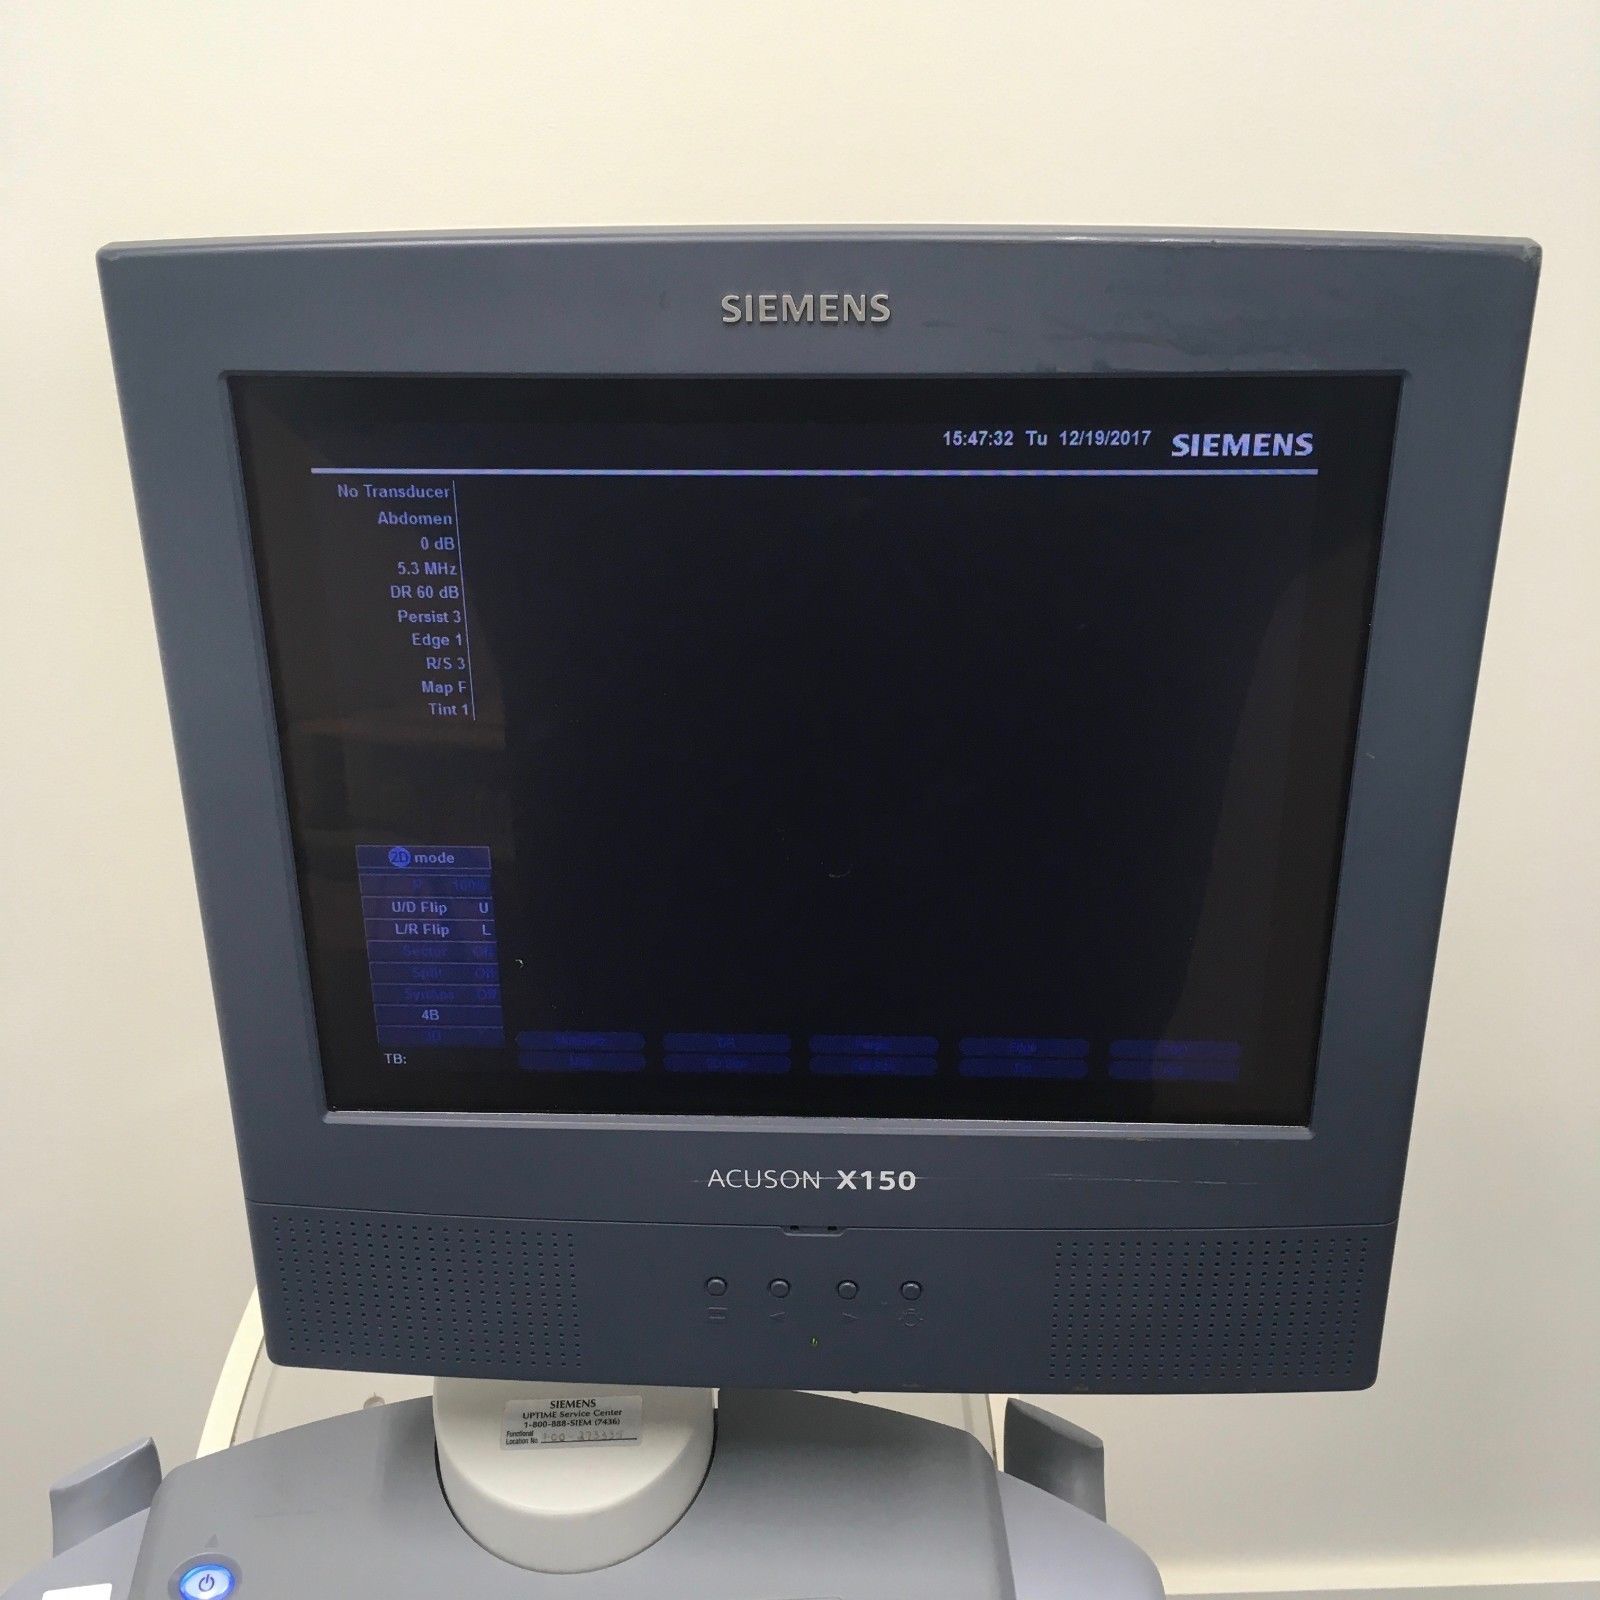 2007 Siemens Acuson X150 Ultrasound Model 10131661 DIAGNOSTIC ULTRASOUND MACHINES FOR SALE